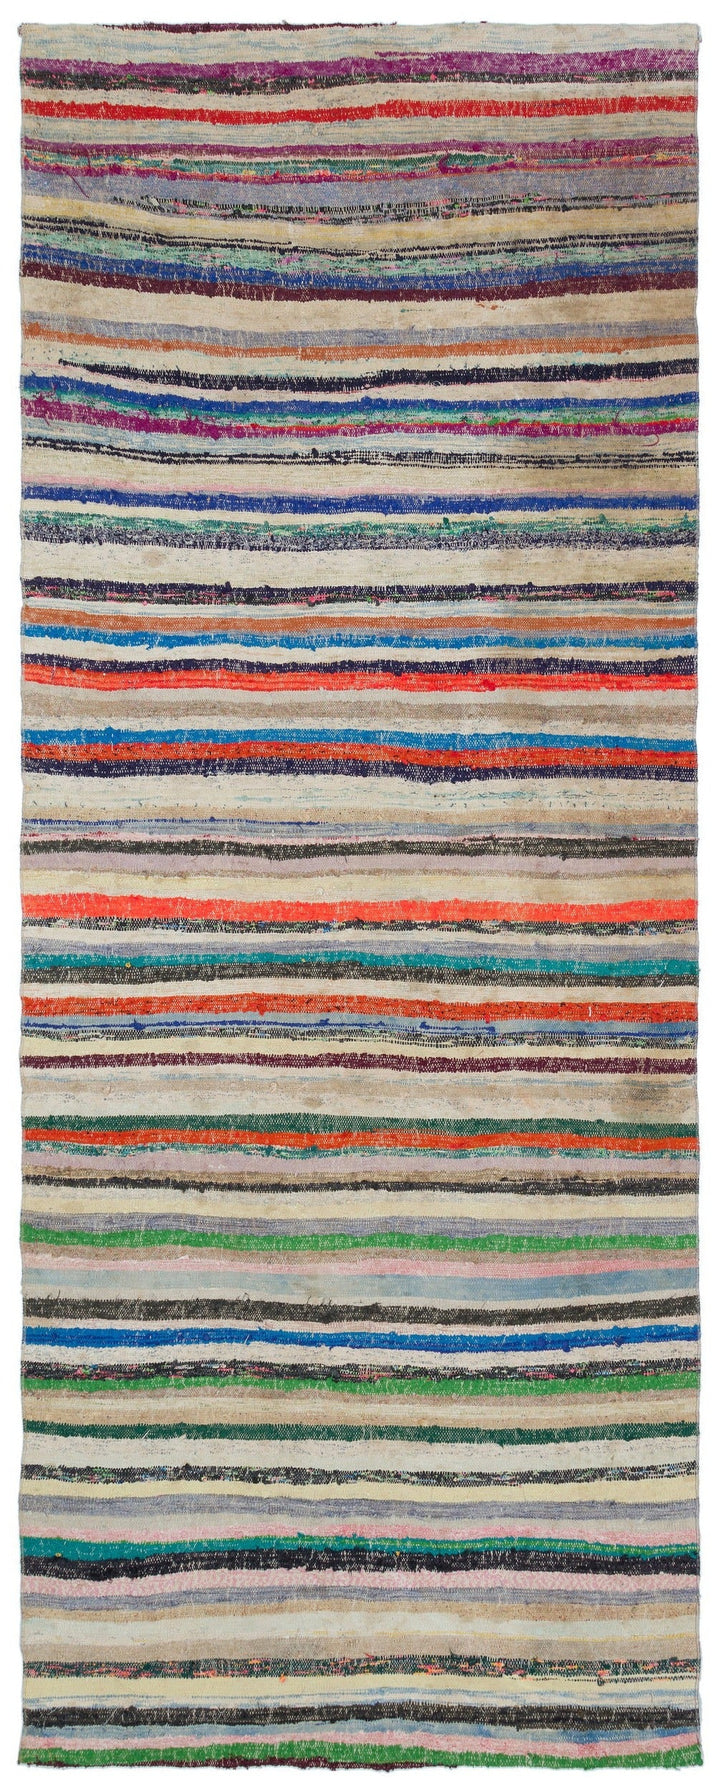 Cretan Beige Striped Wool Hand-Woven Rug 131 x 340